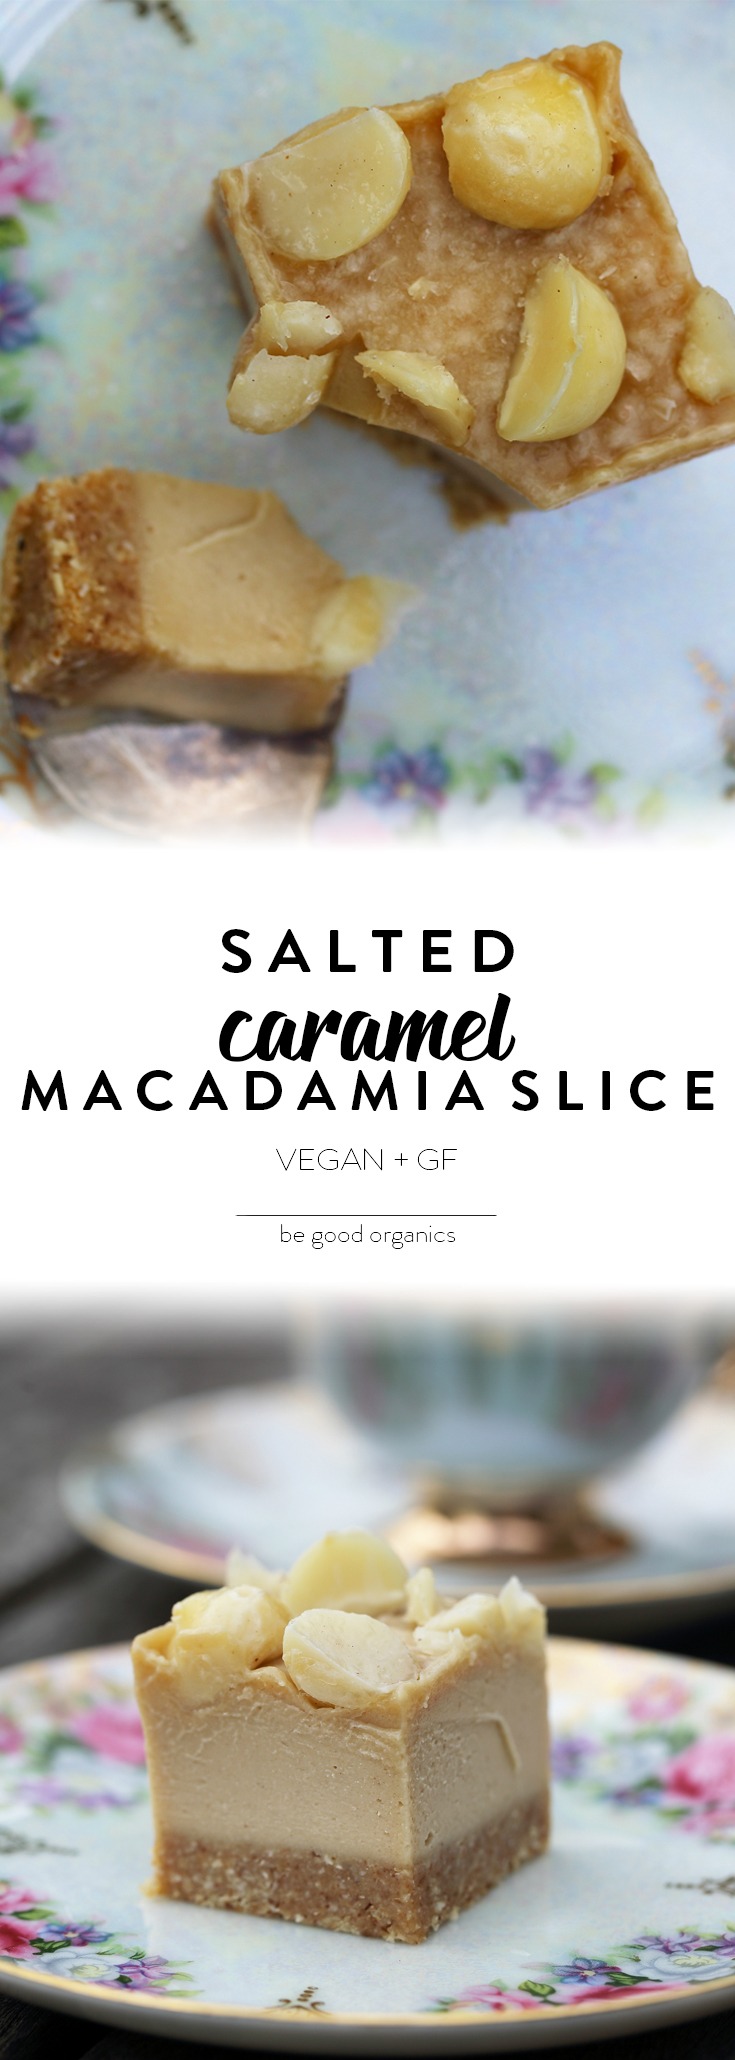 SALTED CARAMEL MACADAMIA SLICE with YouTube video - healthy, raw, dessert, sweet treat, gluten free, dairy free, vegan, paleo